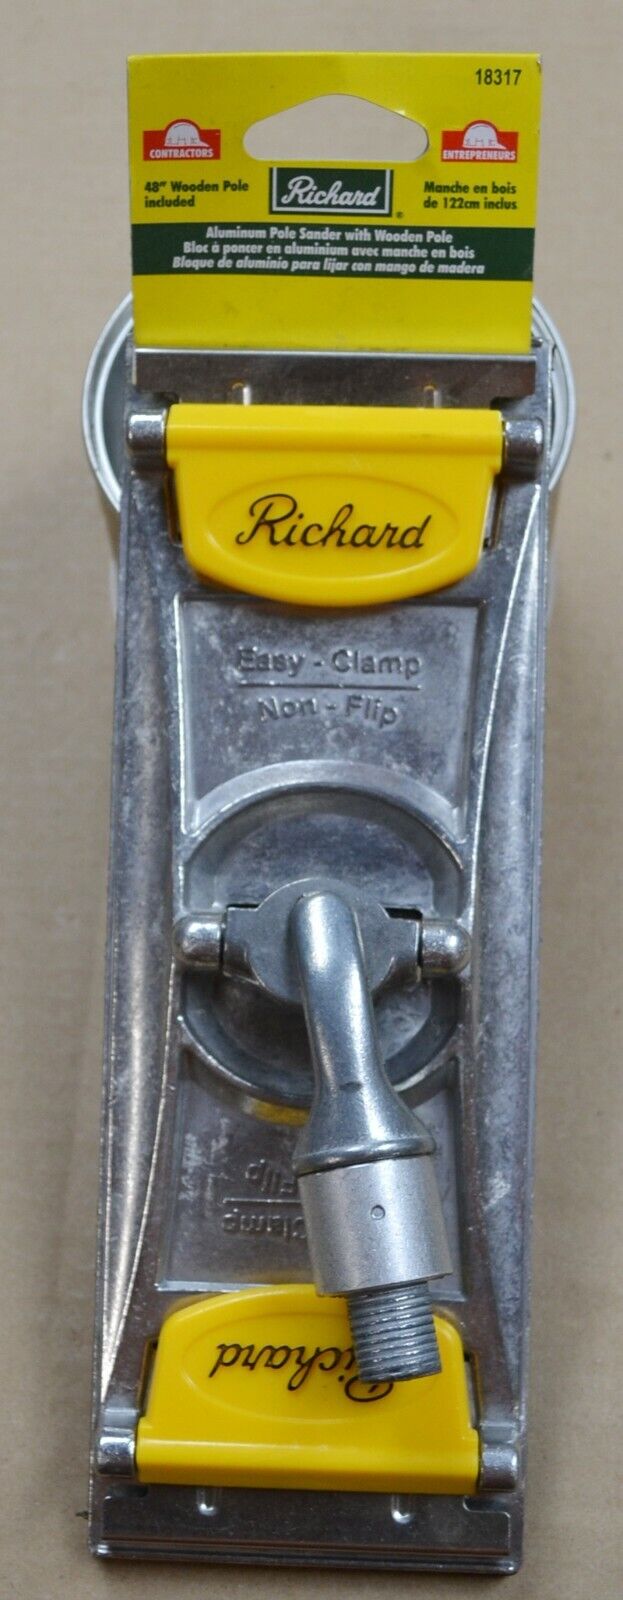 Popular brand Richard Aluminum Pole Sanding Head Clamp Plate Easy Los Angeles Mall Non-Flip